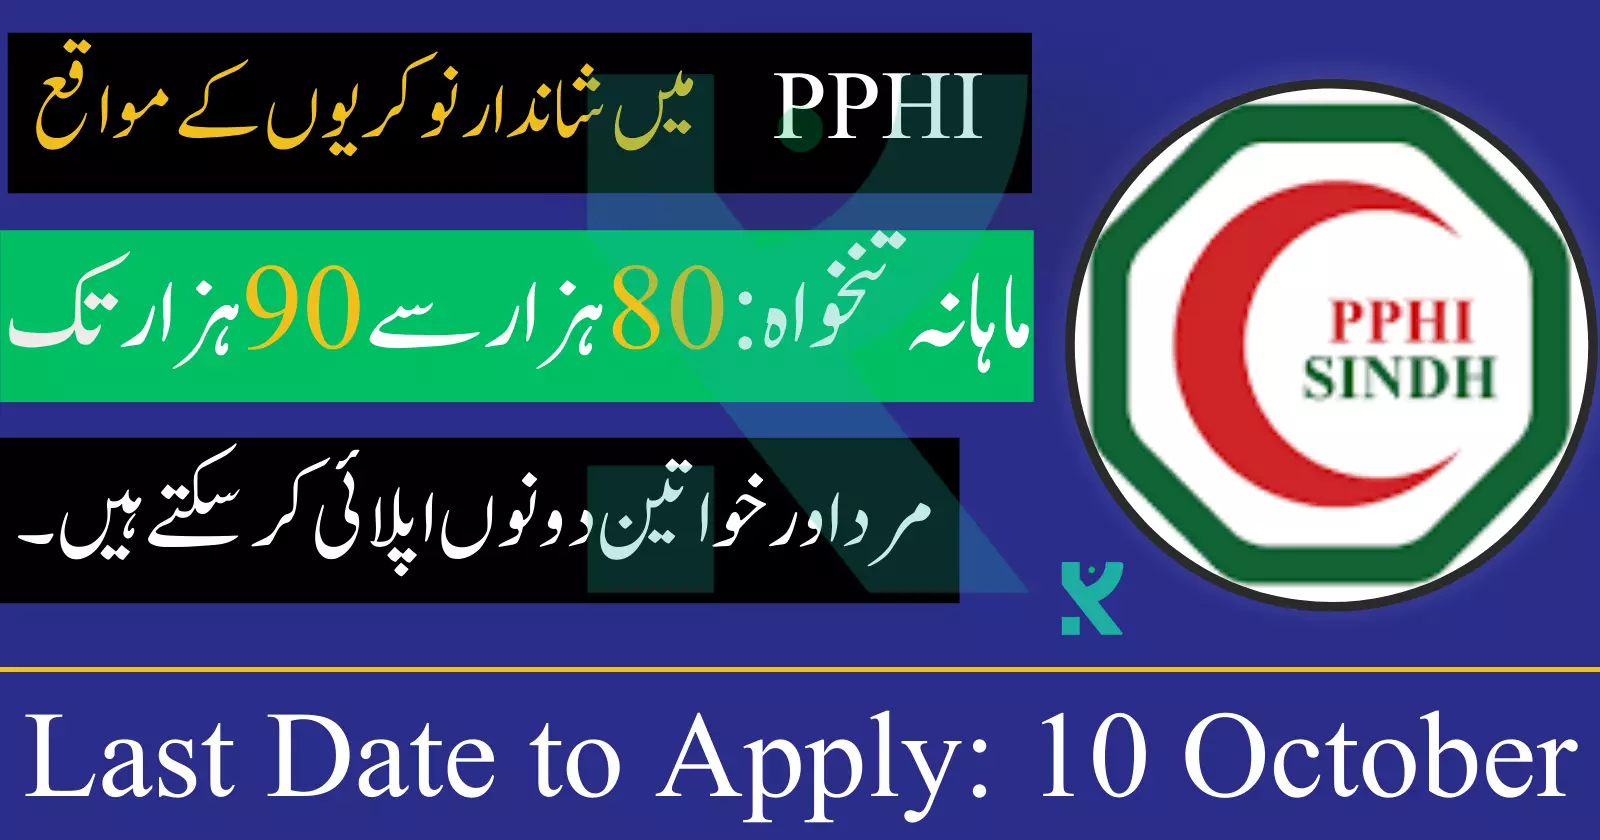 PPHI Sindh Jobs Online Apply